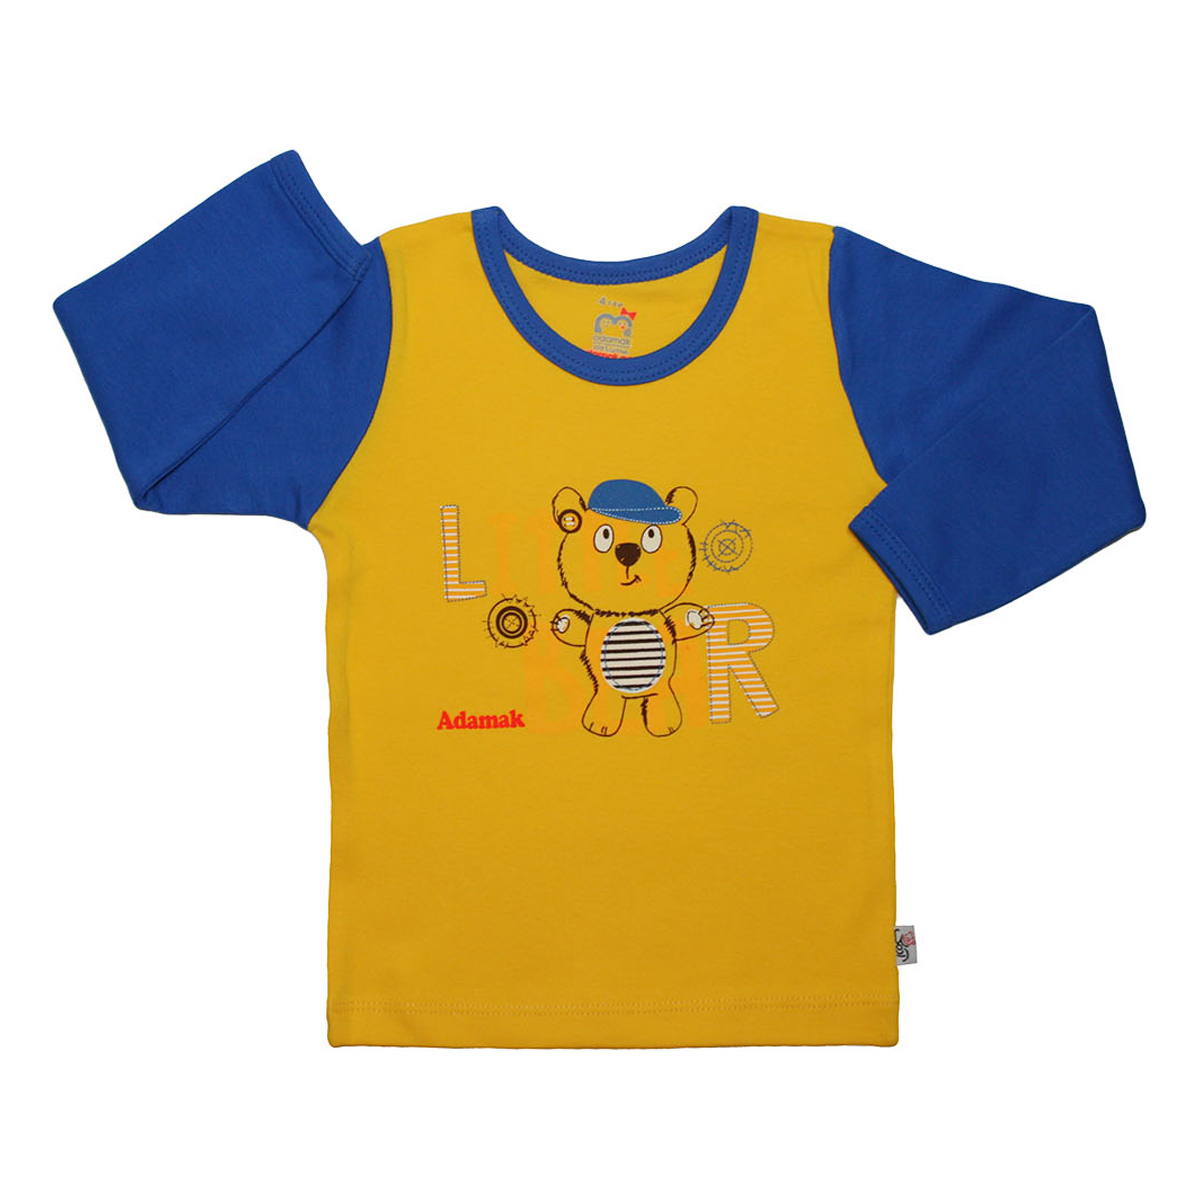  تی شرت آستین بلند نوزادی آدمک مدل Little Bear کد 02